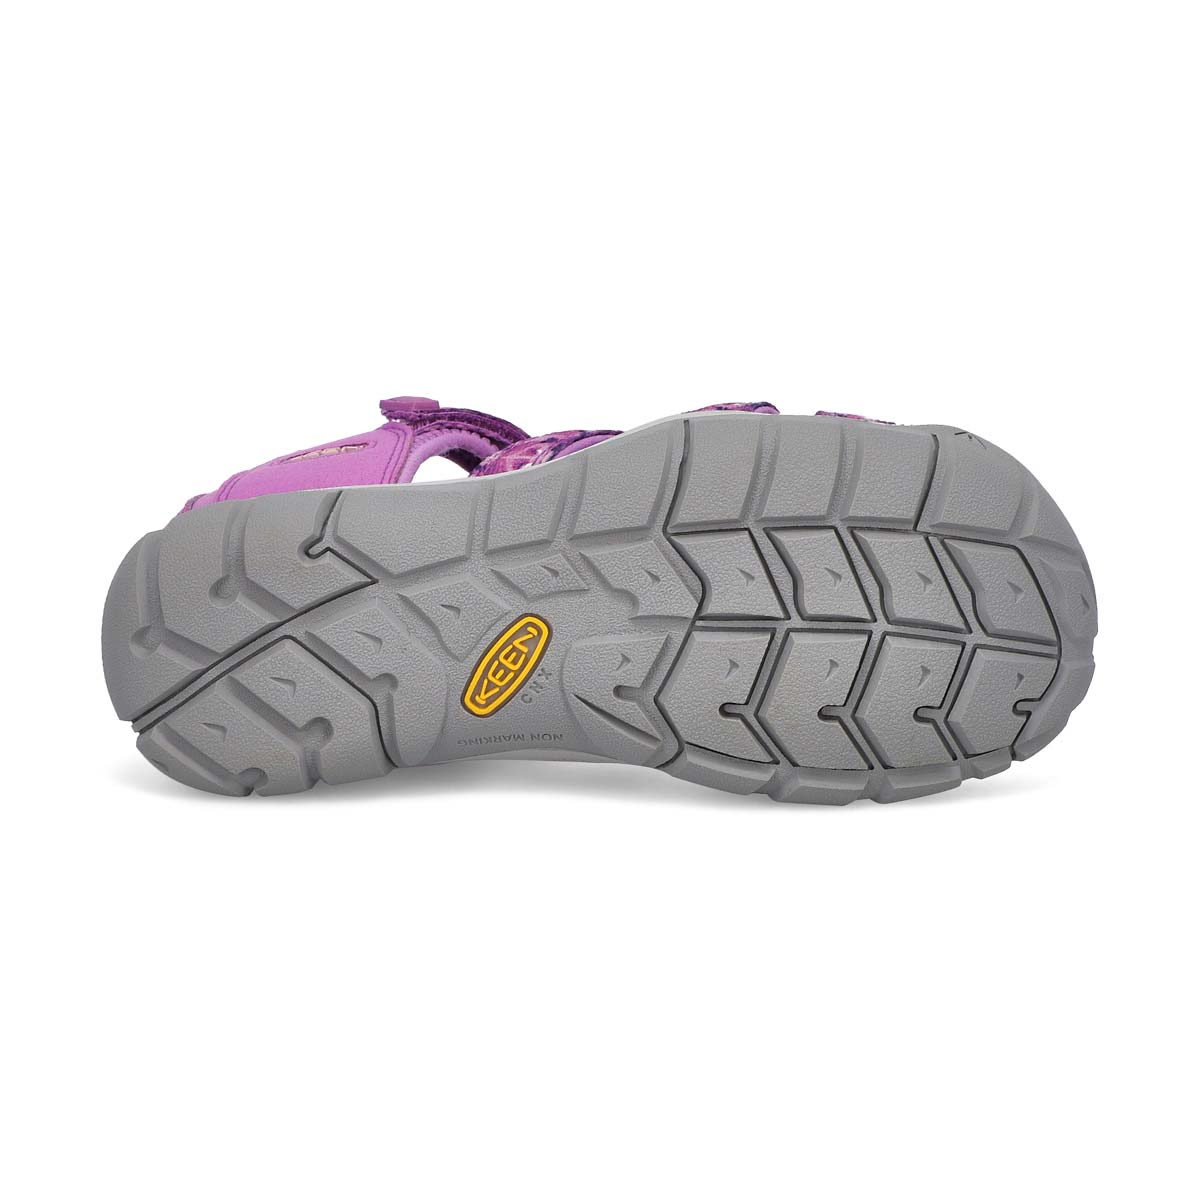 Sandale sport SeacampIICNX violet/lavande filles